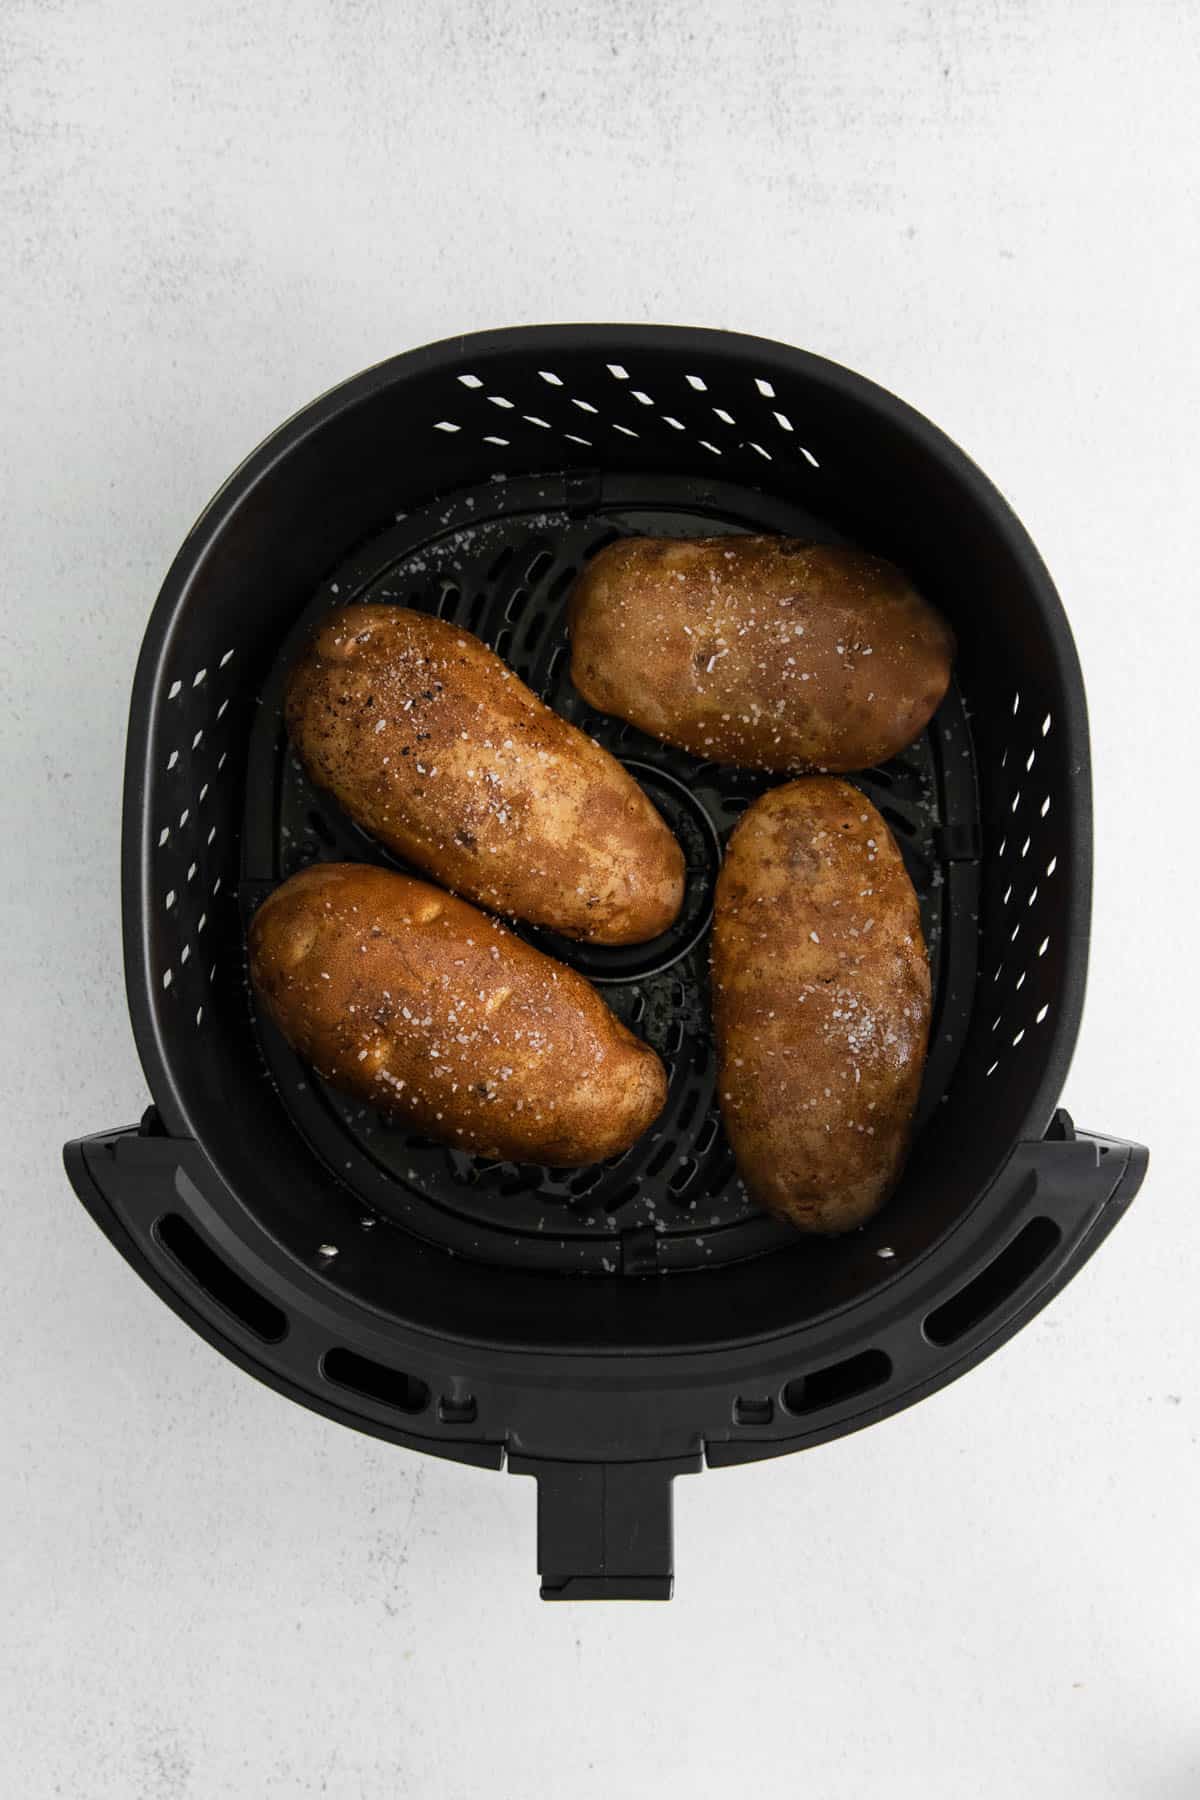 Four russett potatoes in the air fryer before baking.